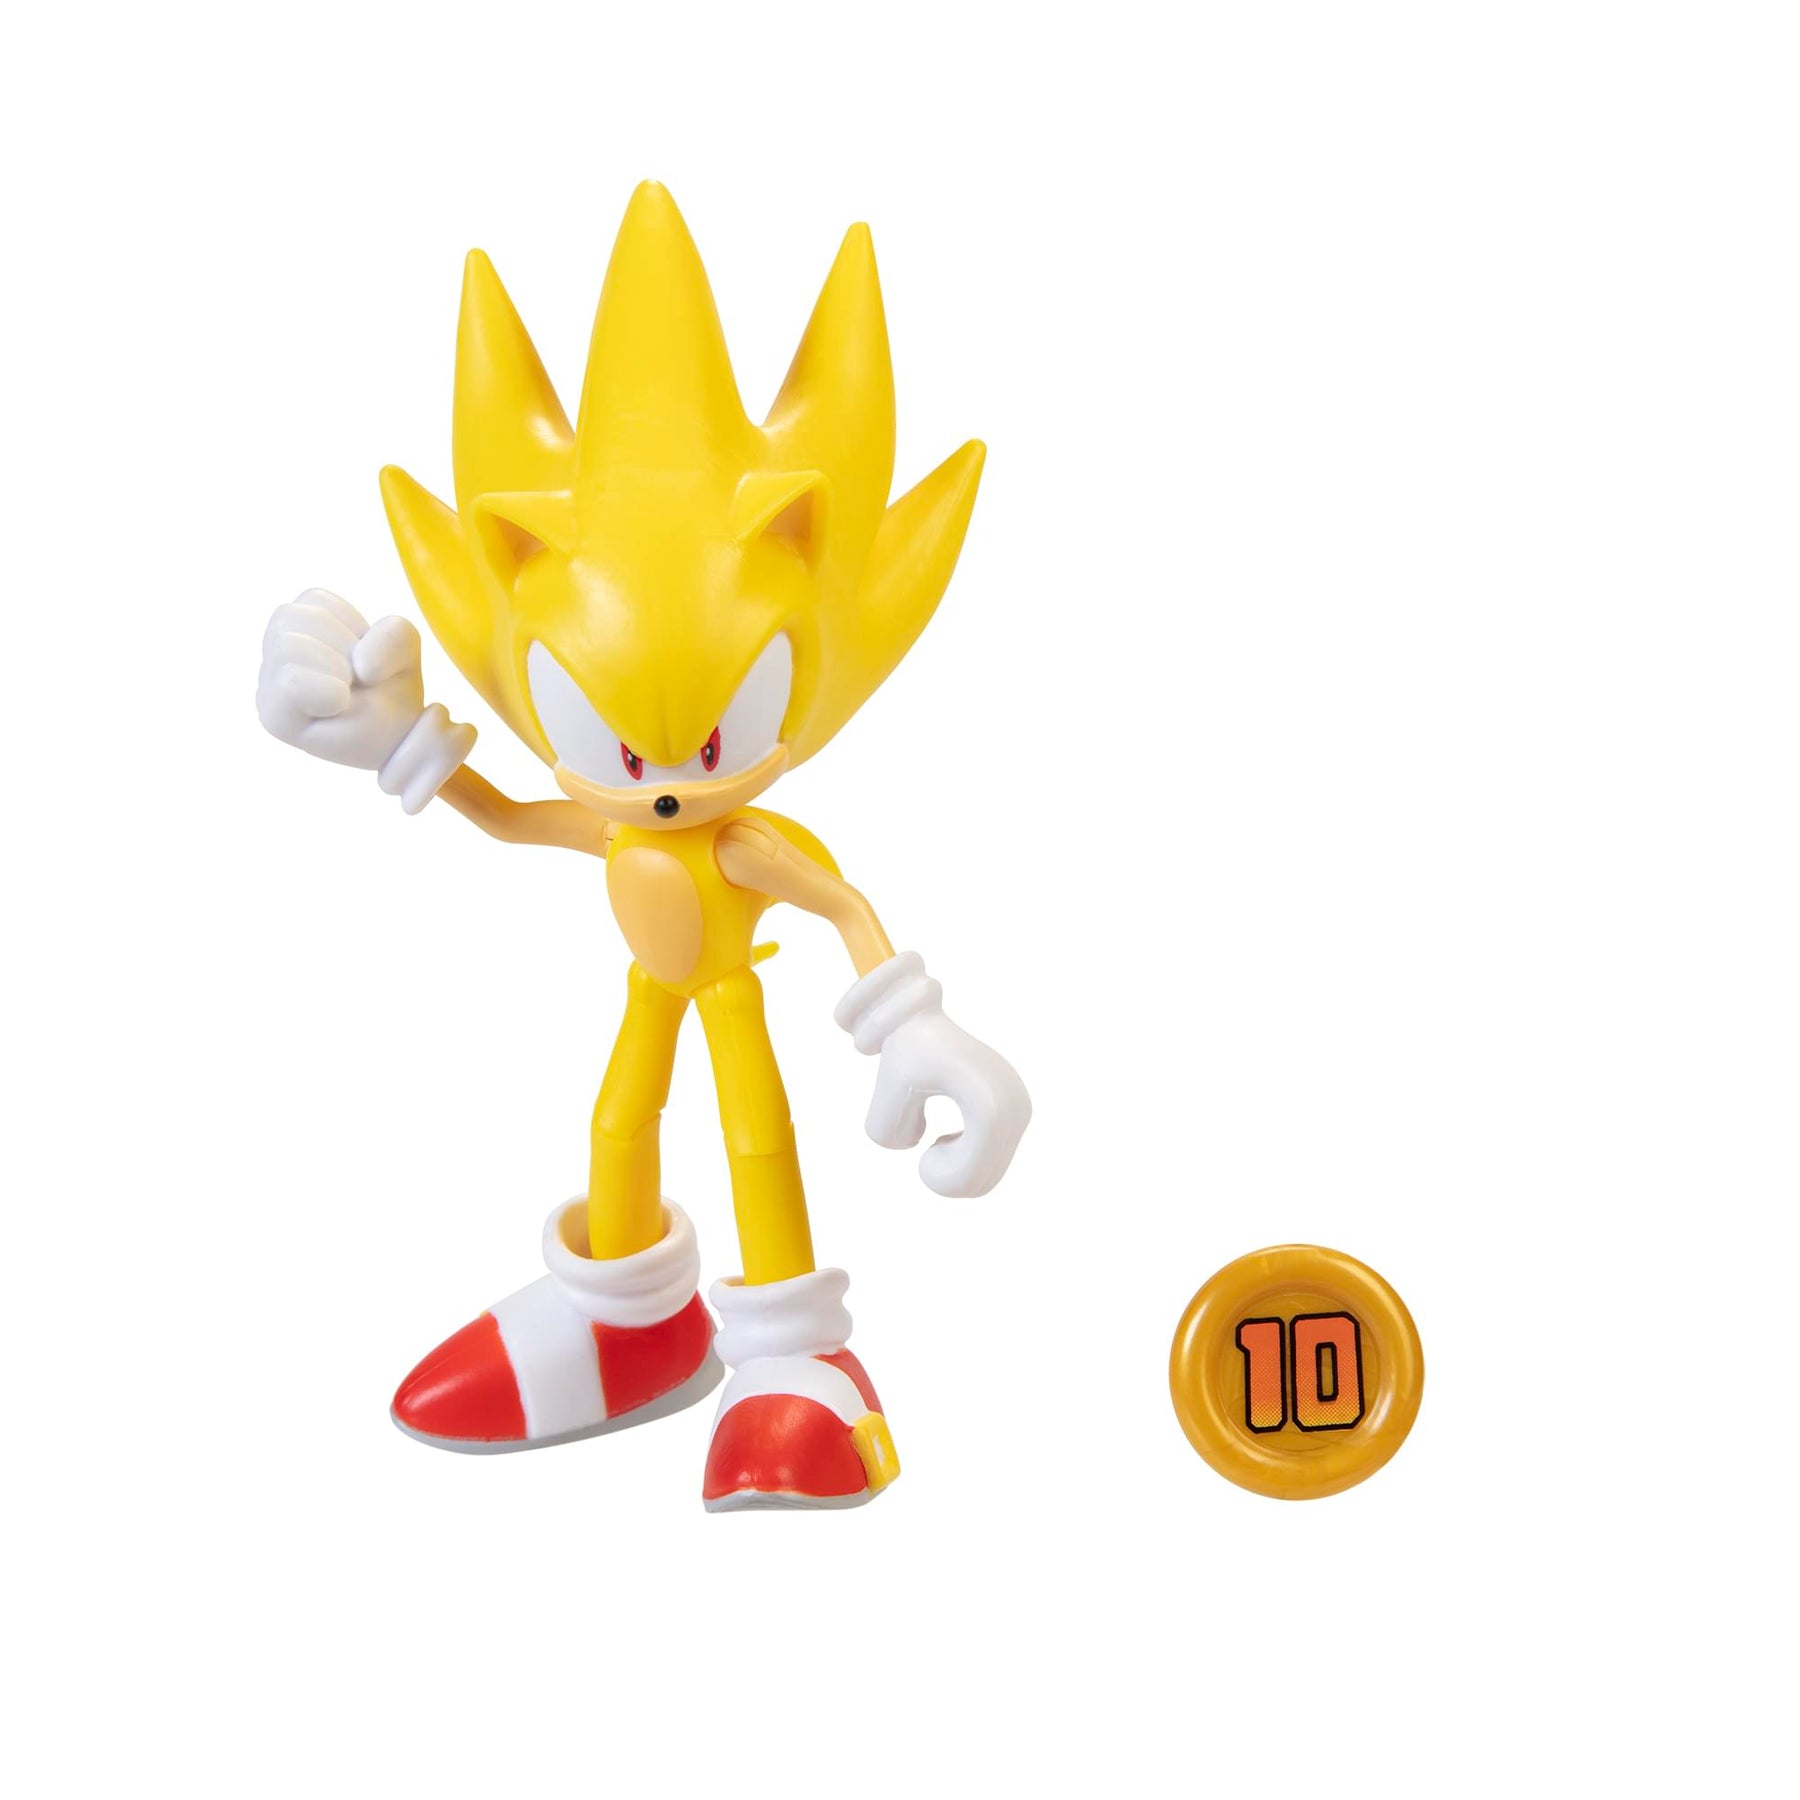 Not-so-Super Sonic 2 - Sonic Retro